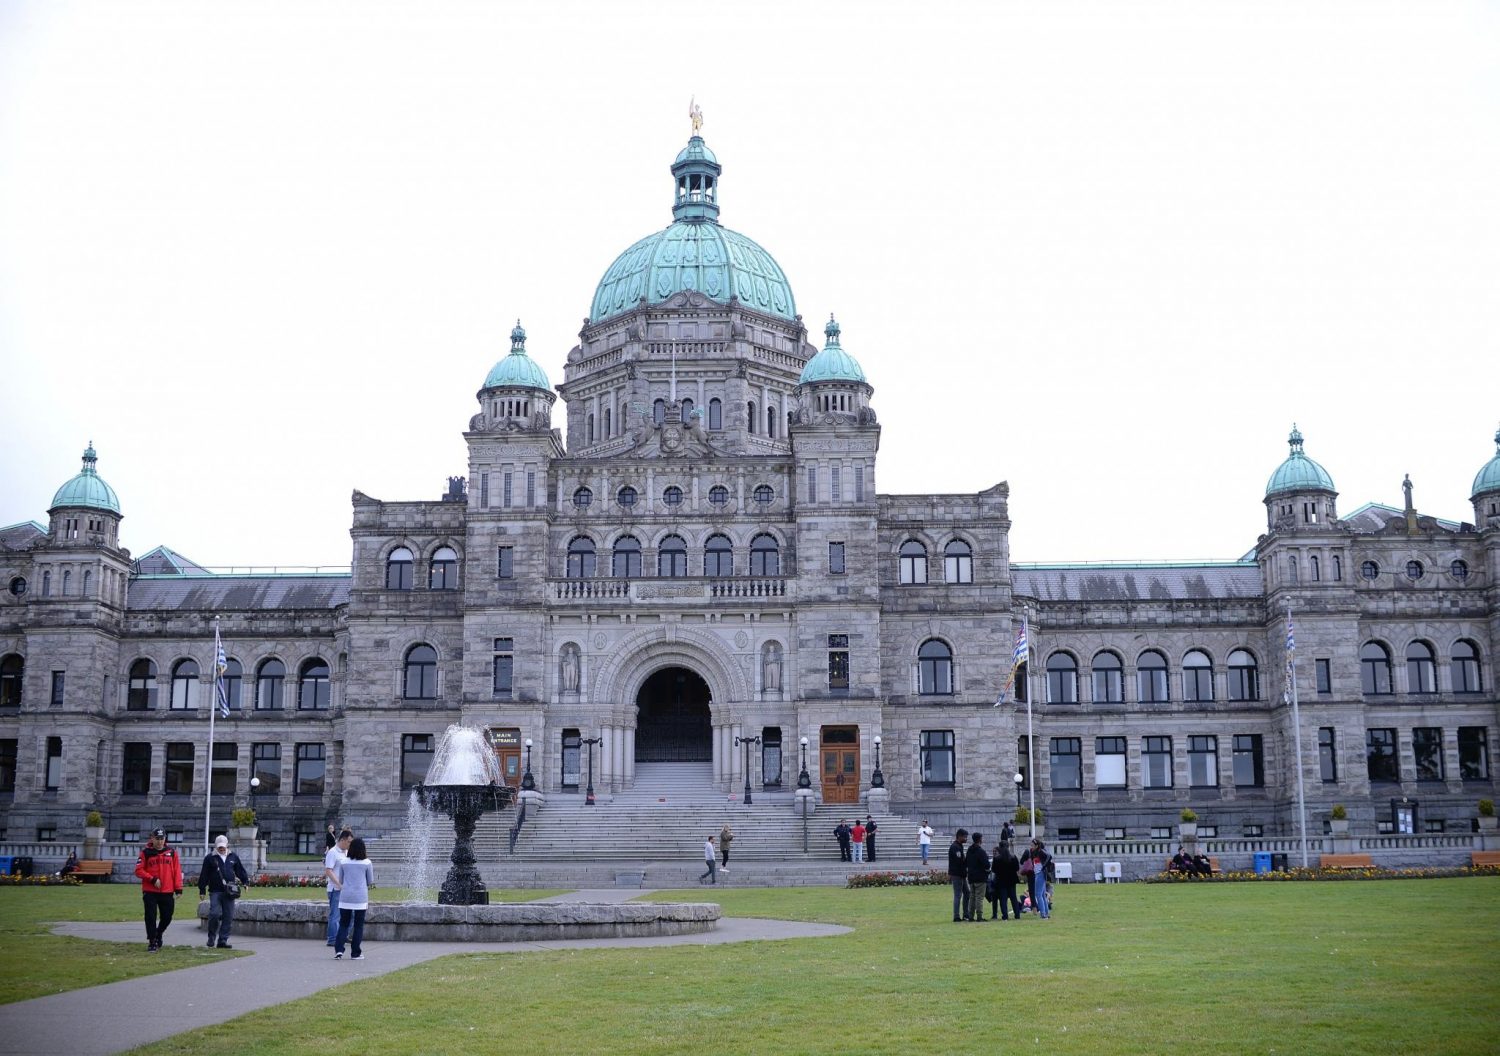 Legislative Assembly of British Columbia 